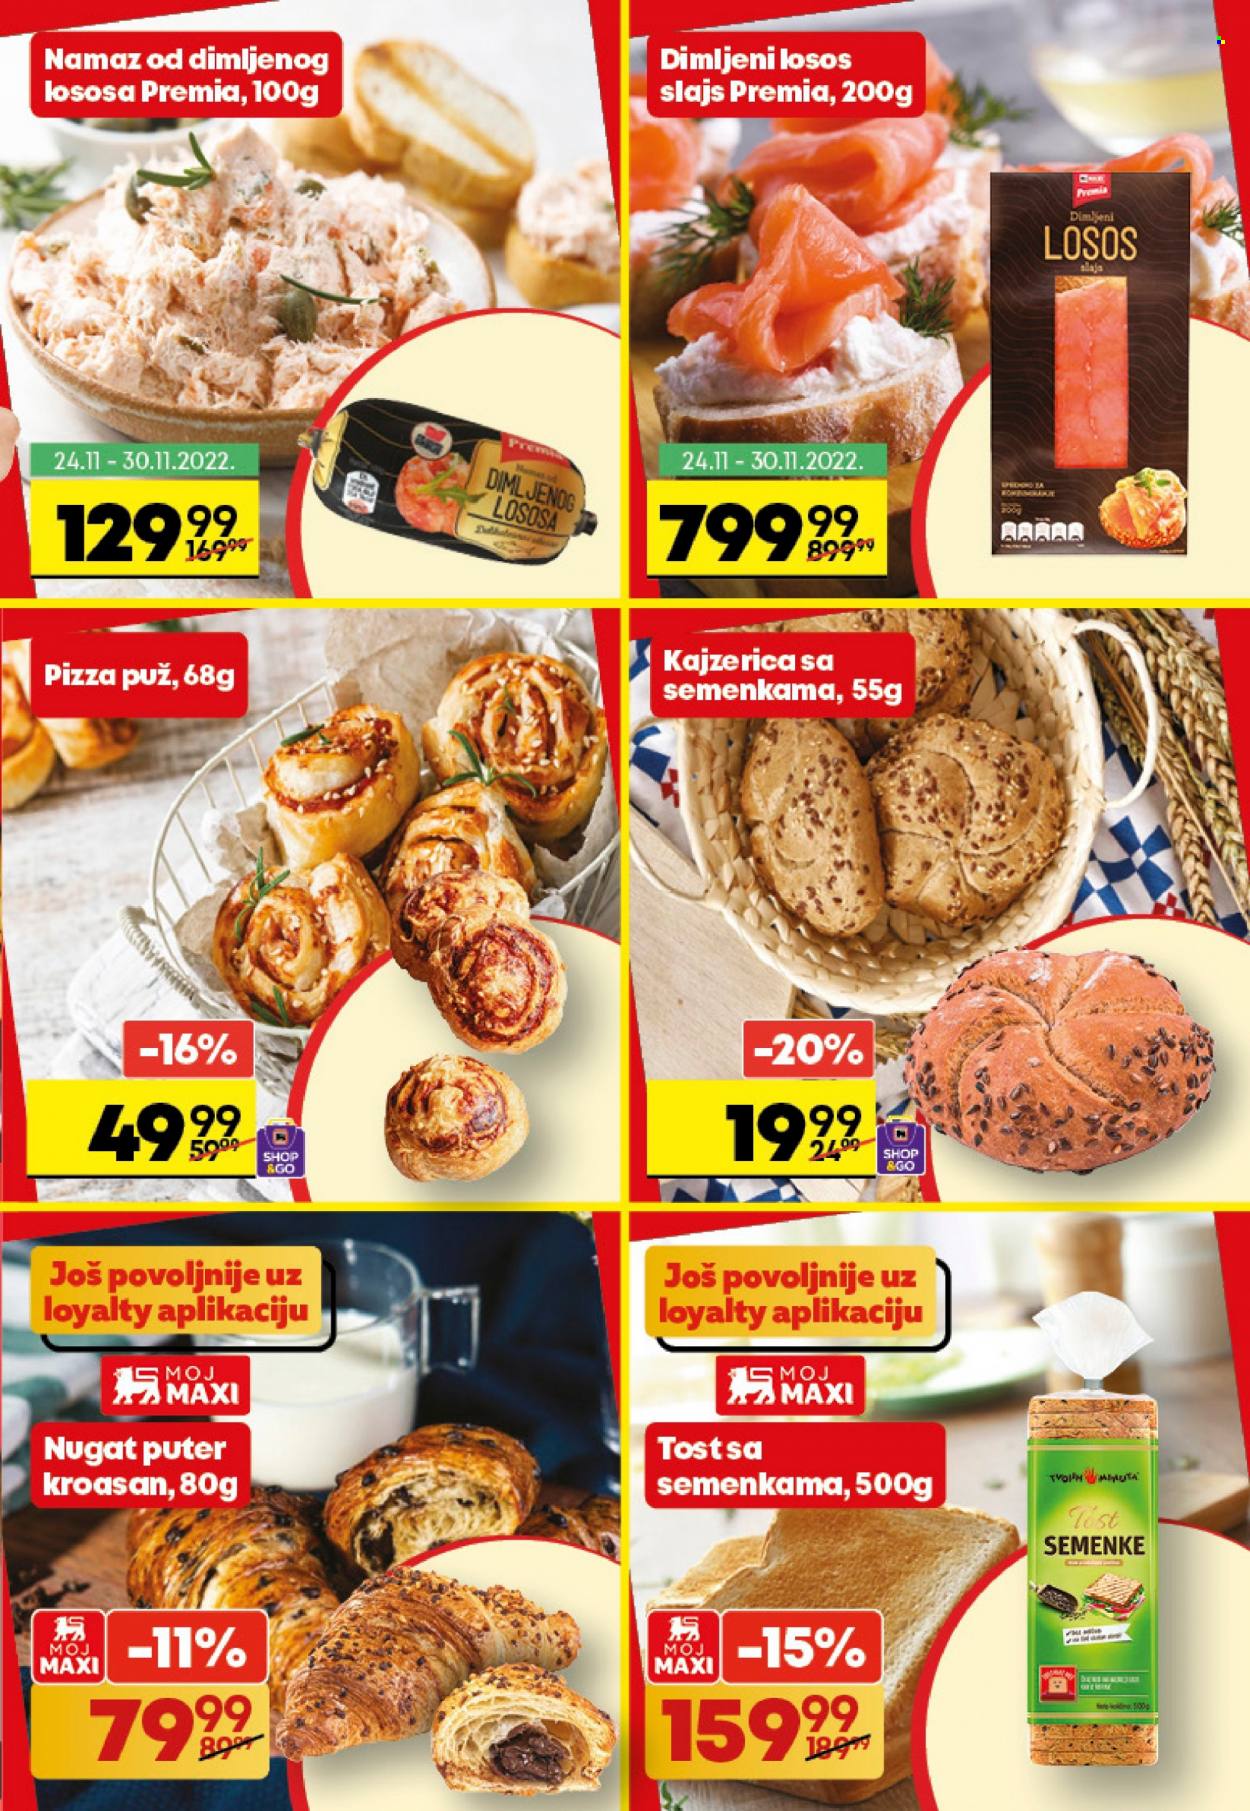 Maxi katalog - 24.11.2022 - 30.11.2022 - Proizvodi na akciji - tost hleb, pecivo, kajzerica, kroasan, pizza, namaz, dimljeni losos, nugat, Fa. Stranica 5.